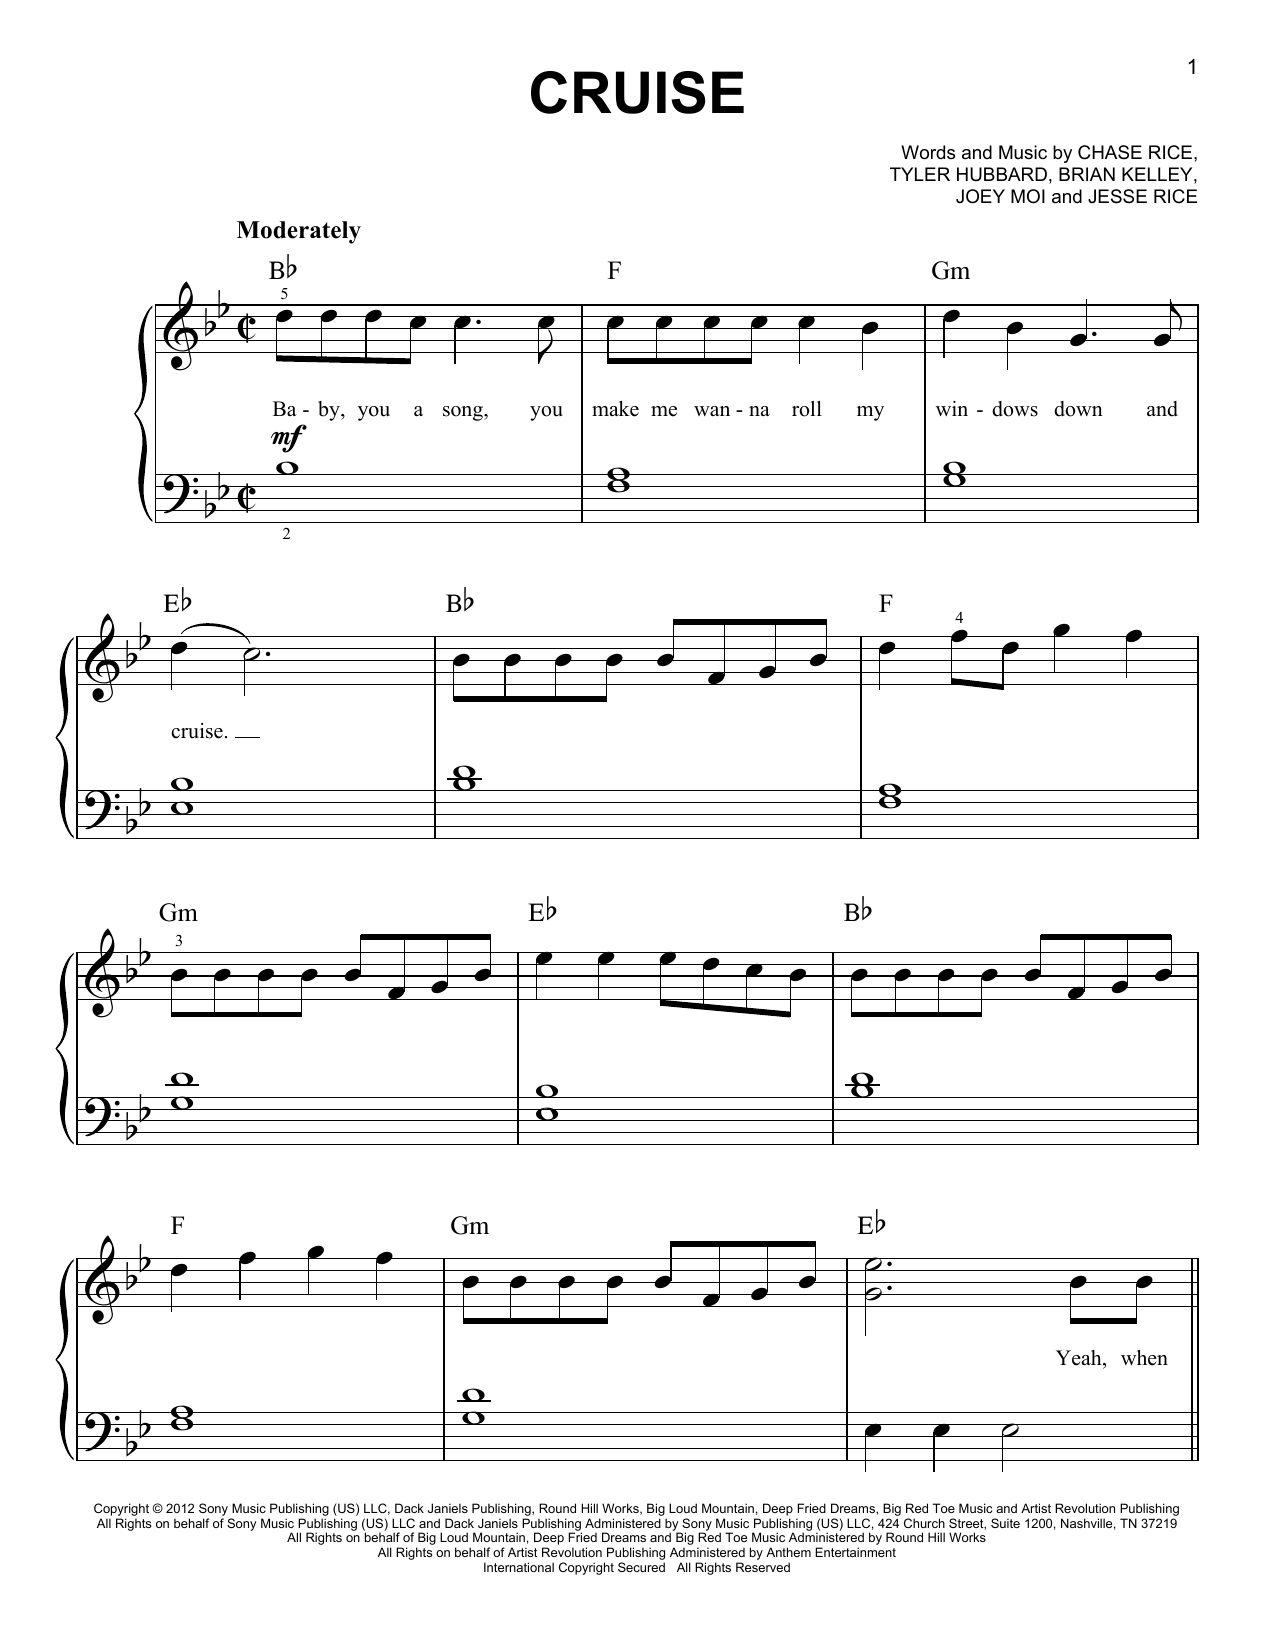 Florida Georgia Line Cruise Sheet Music Notes & Chords for Tenor Saxophone - Download or Print PDF